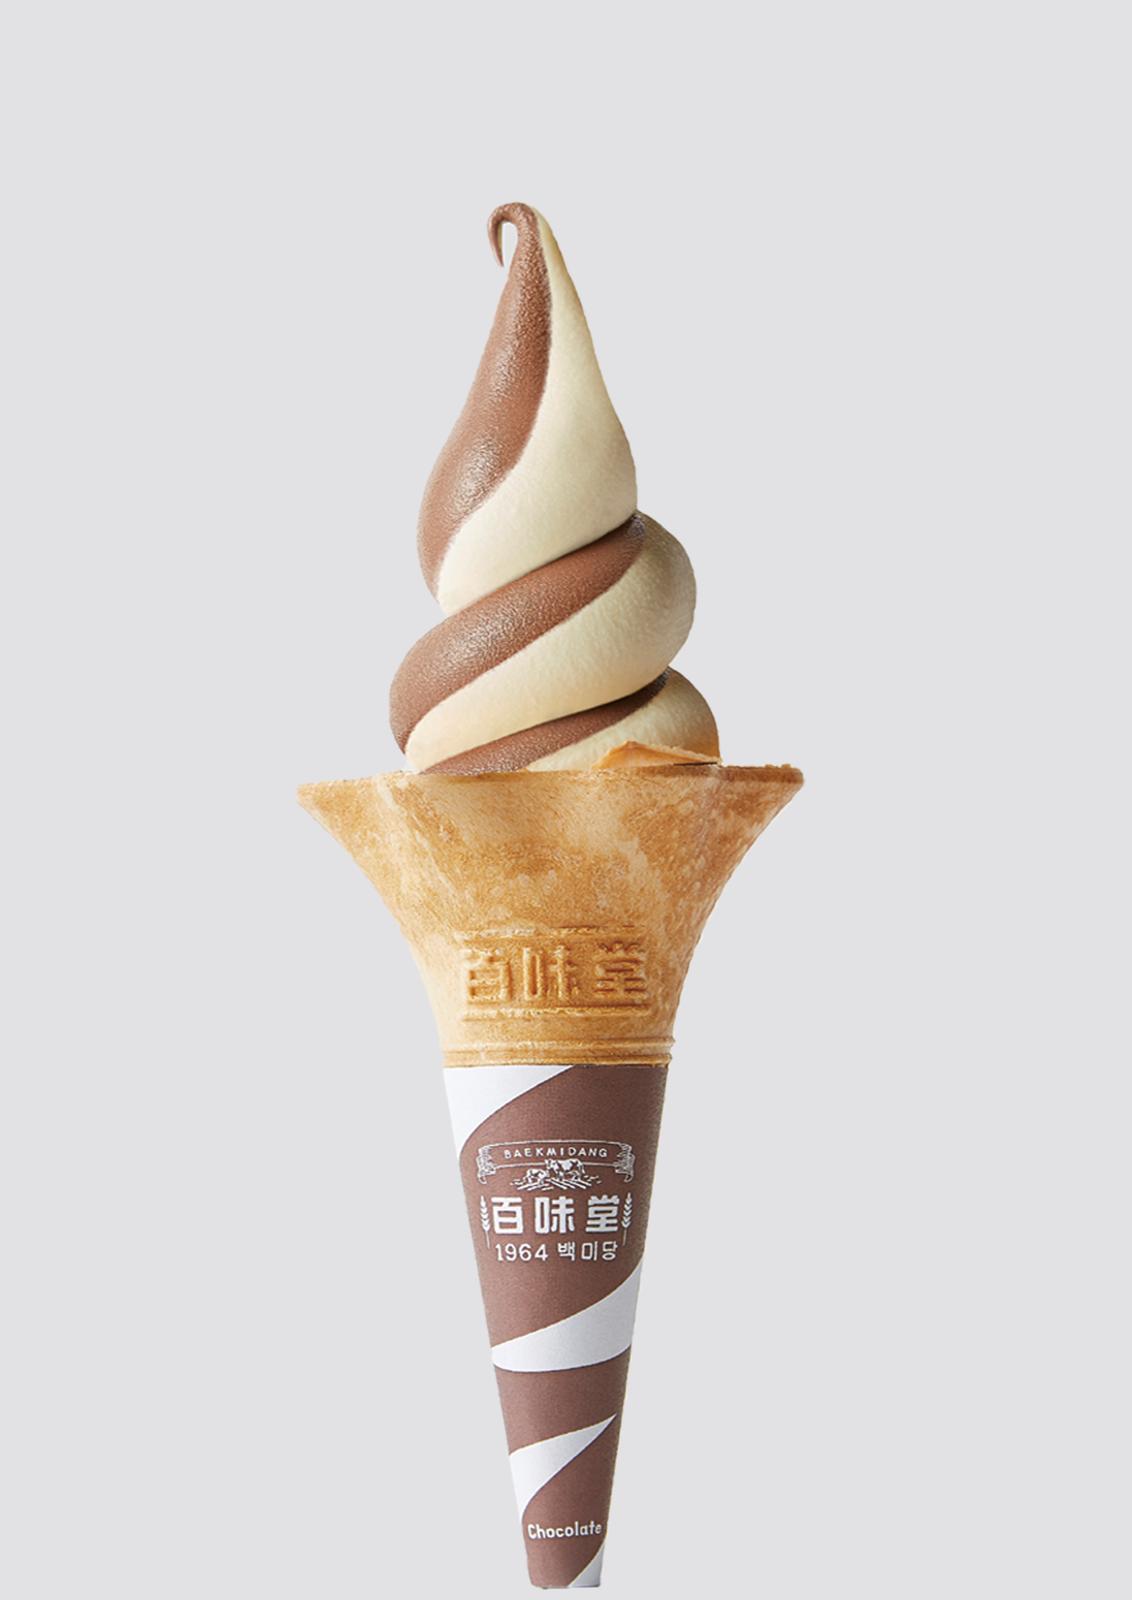 Meet The NEW Baekmidang Ice-cream Flavors